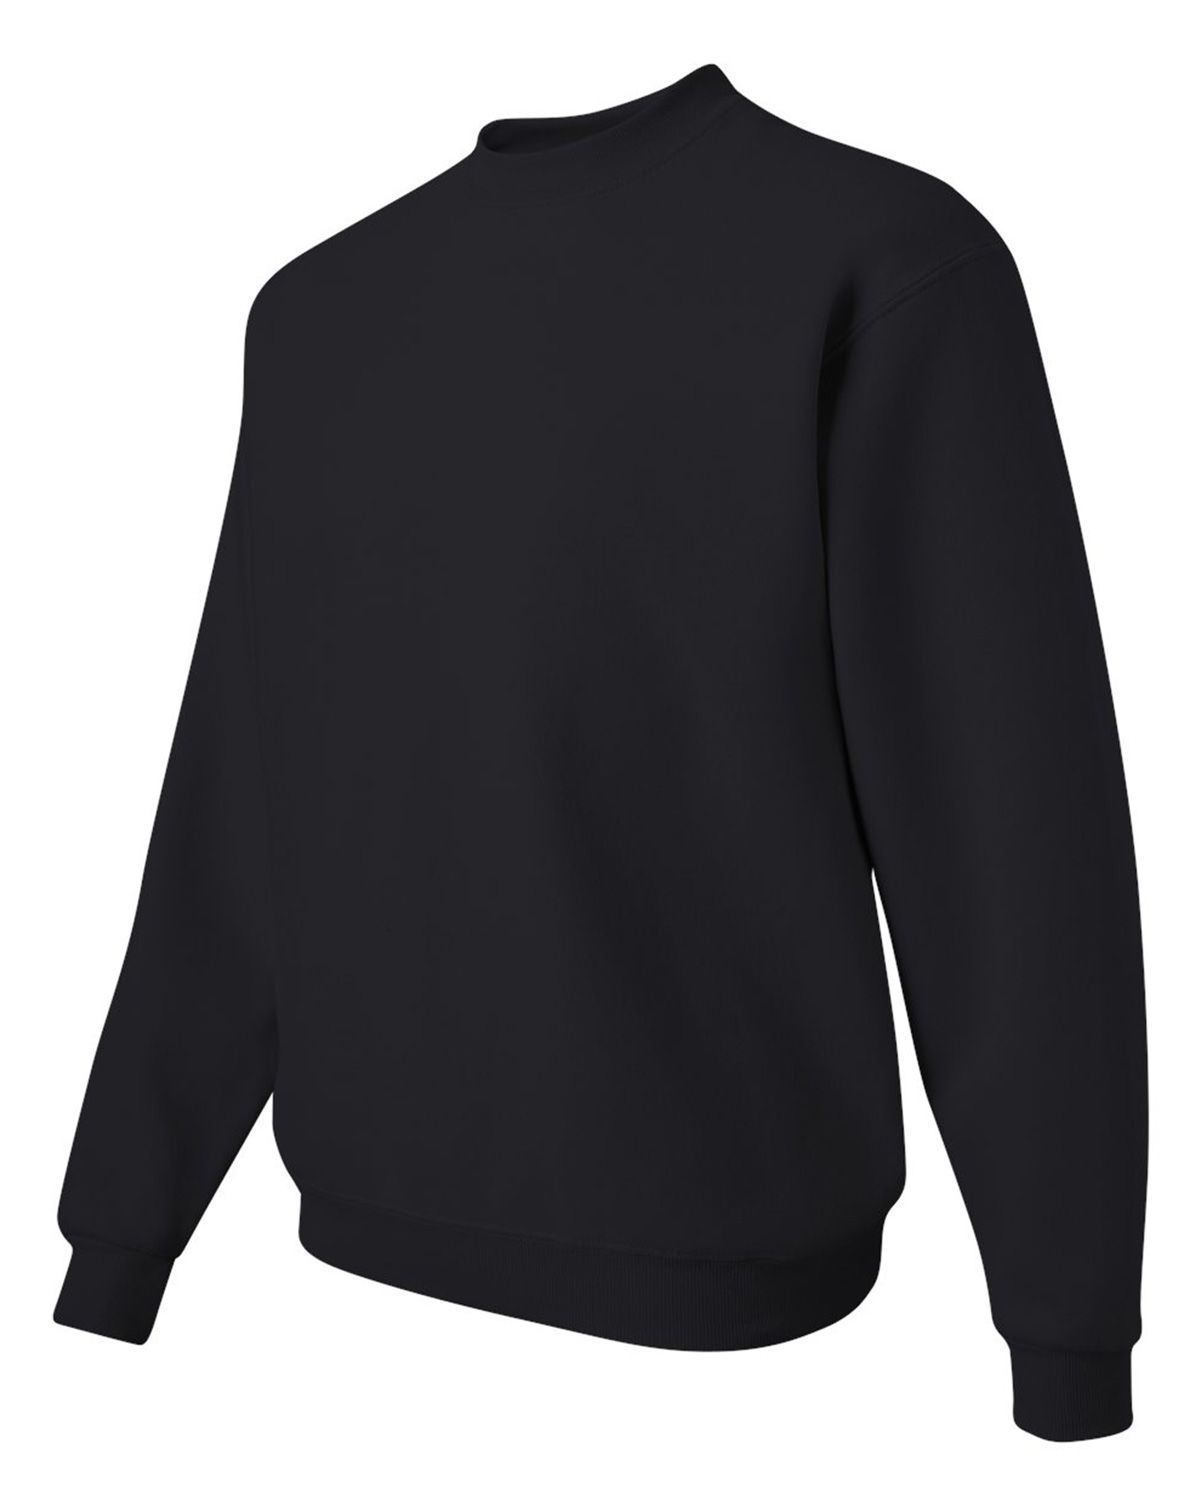 Size Chart for Jerzees 562MR NuBlend Crewneck Sweatshirt